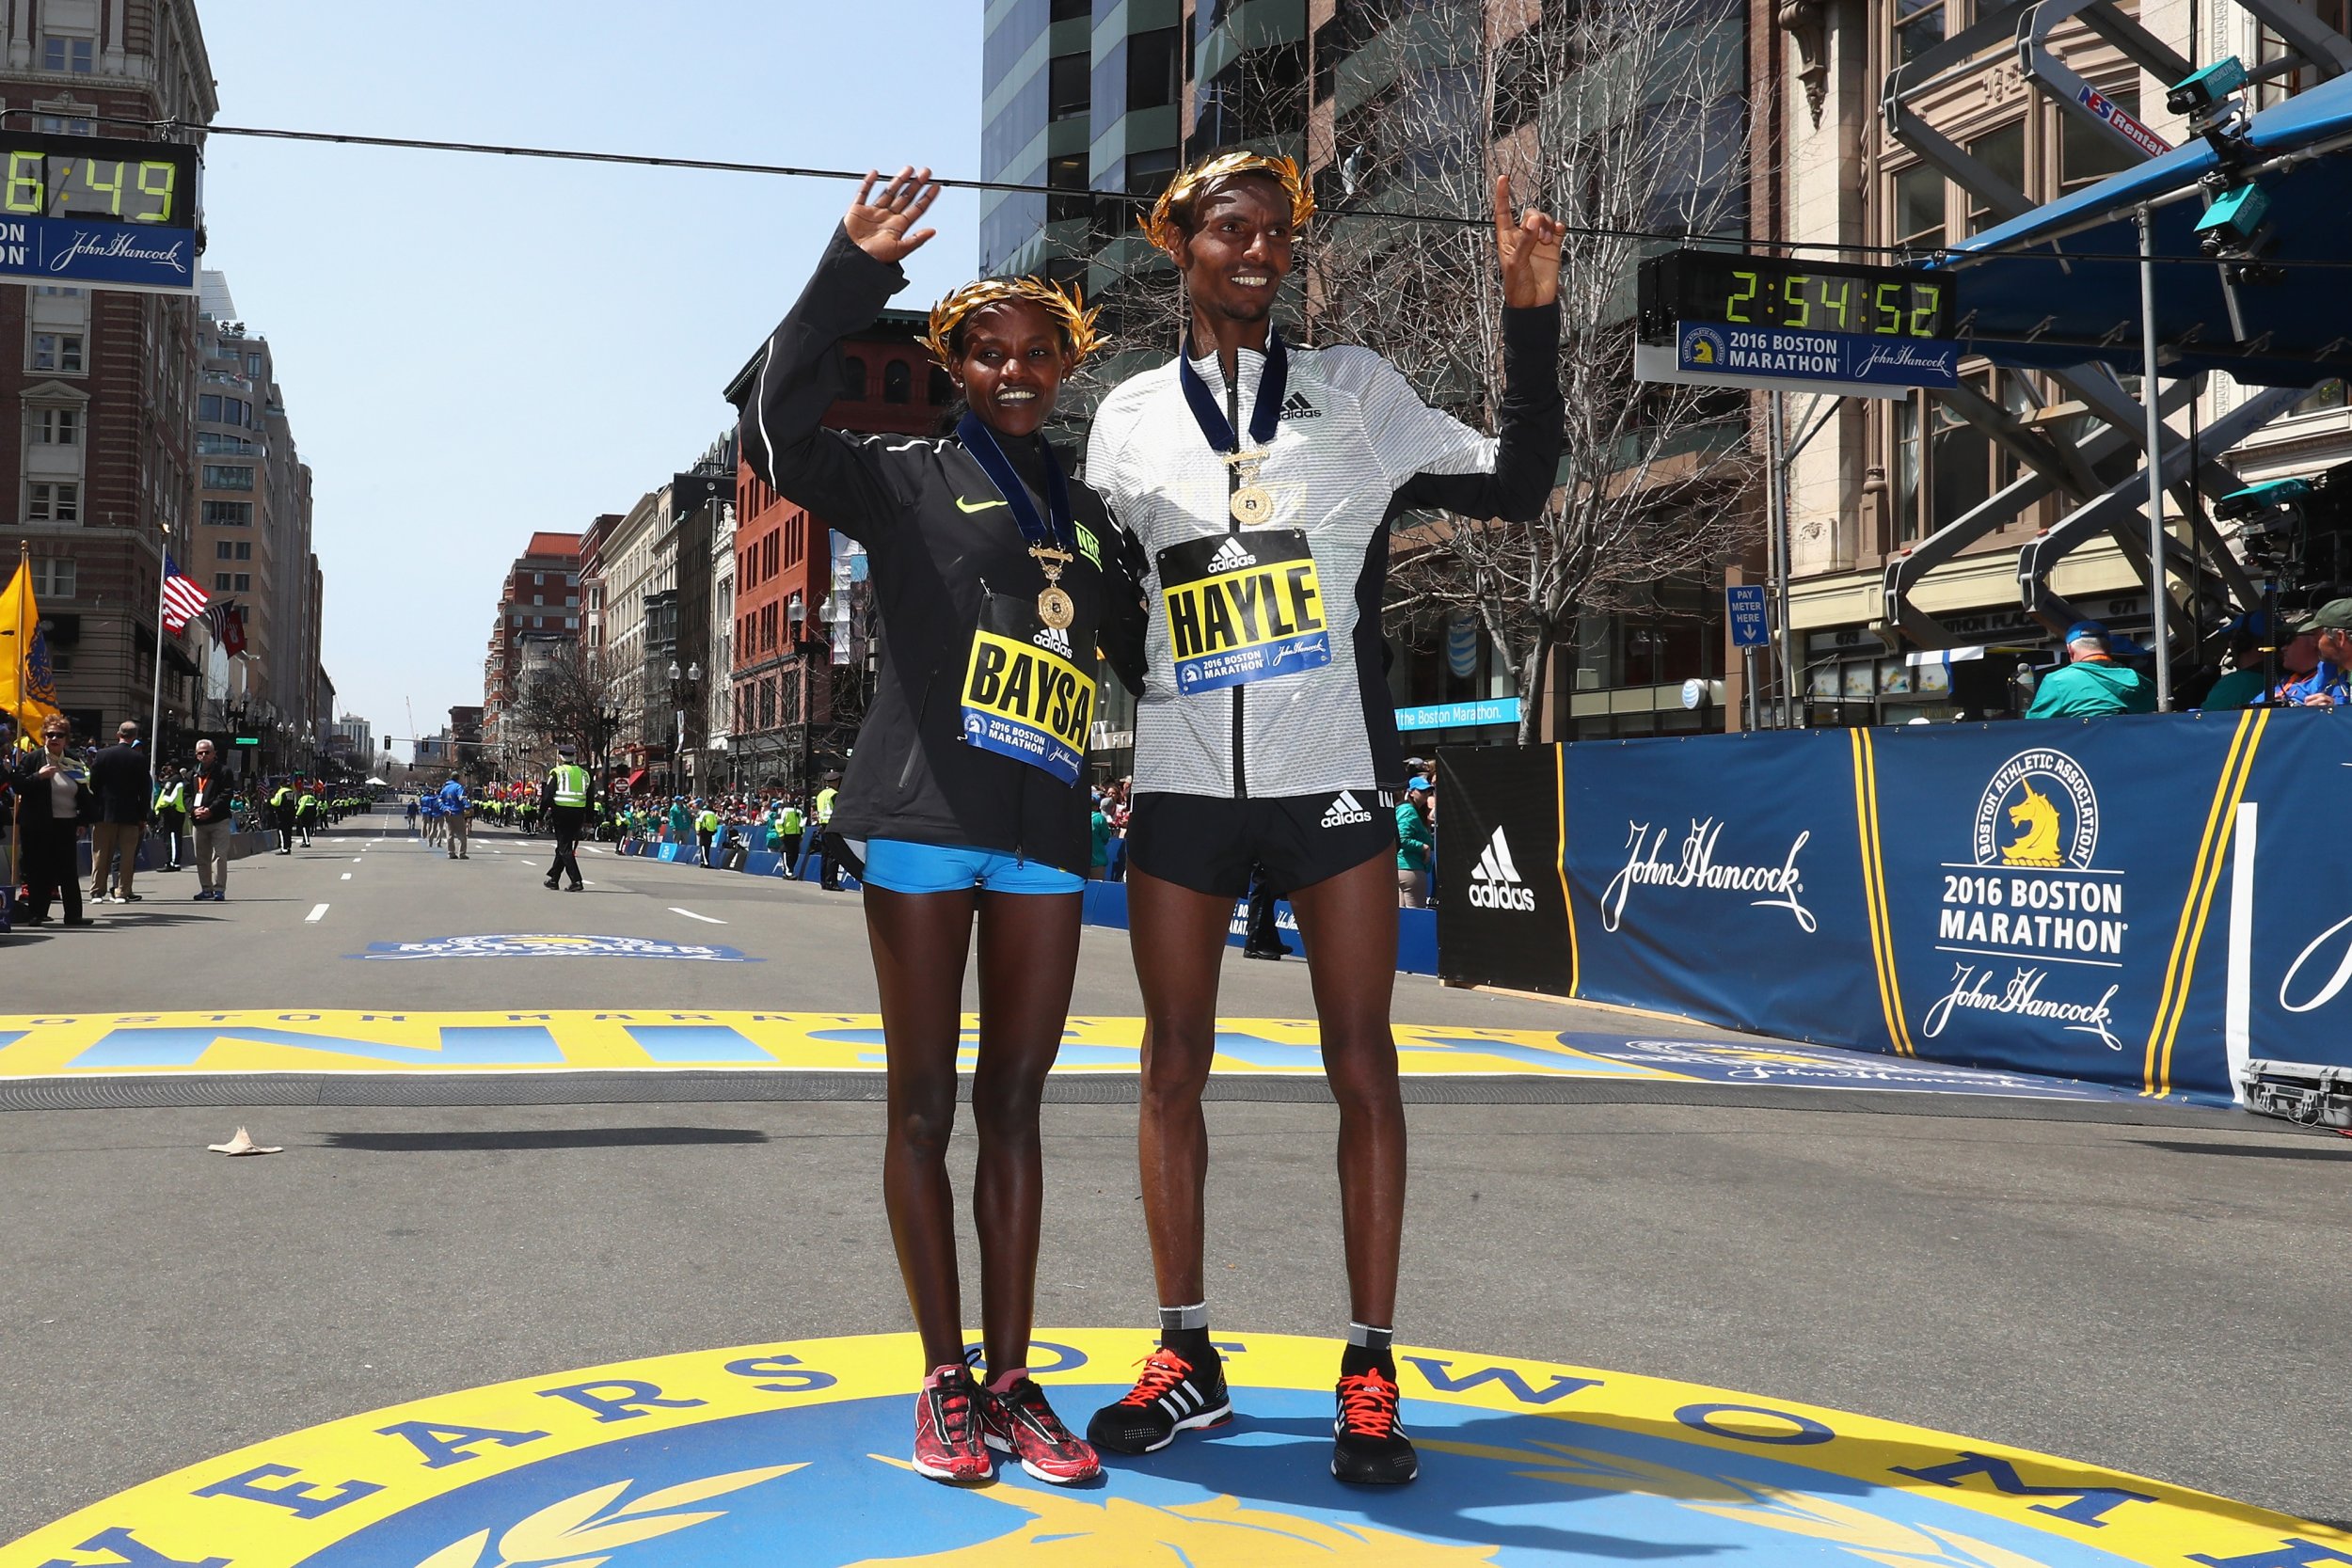 Boston Marathon Prize Money How Much Do The 2016 Men And Women Winners